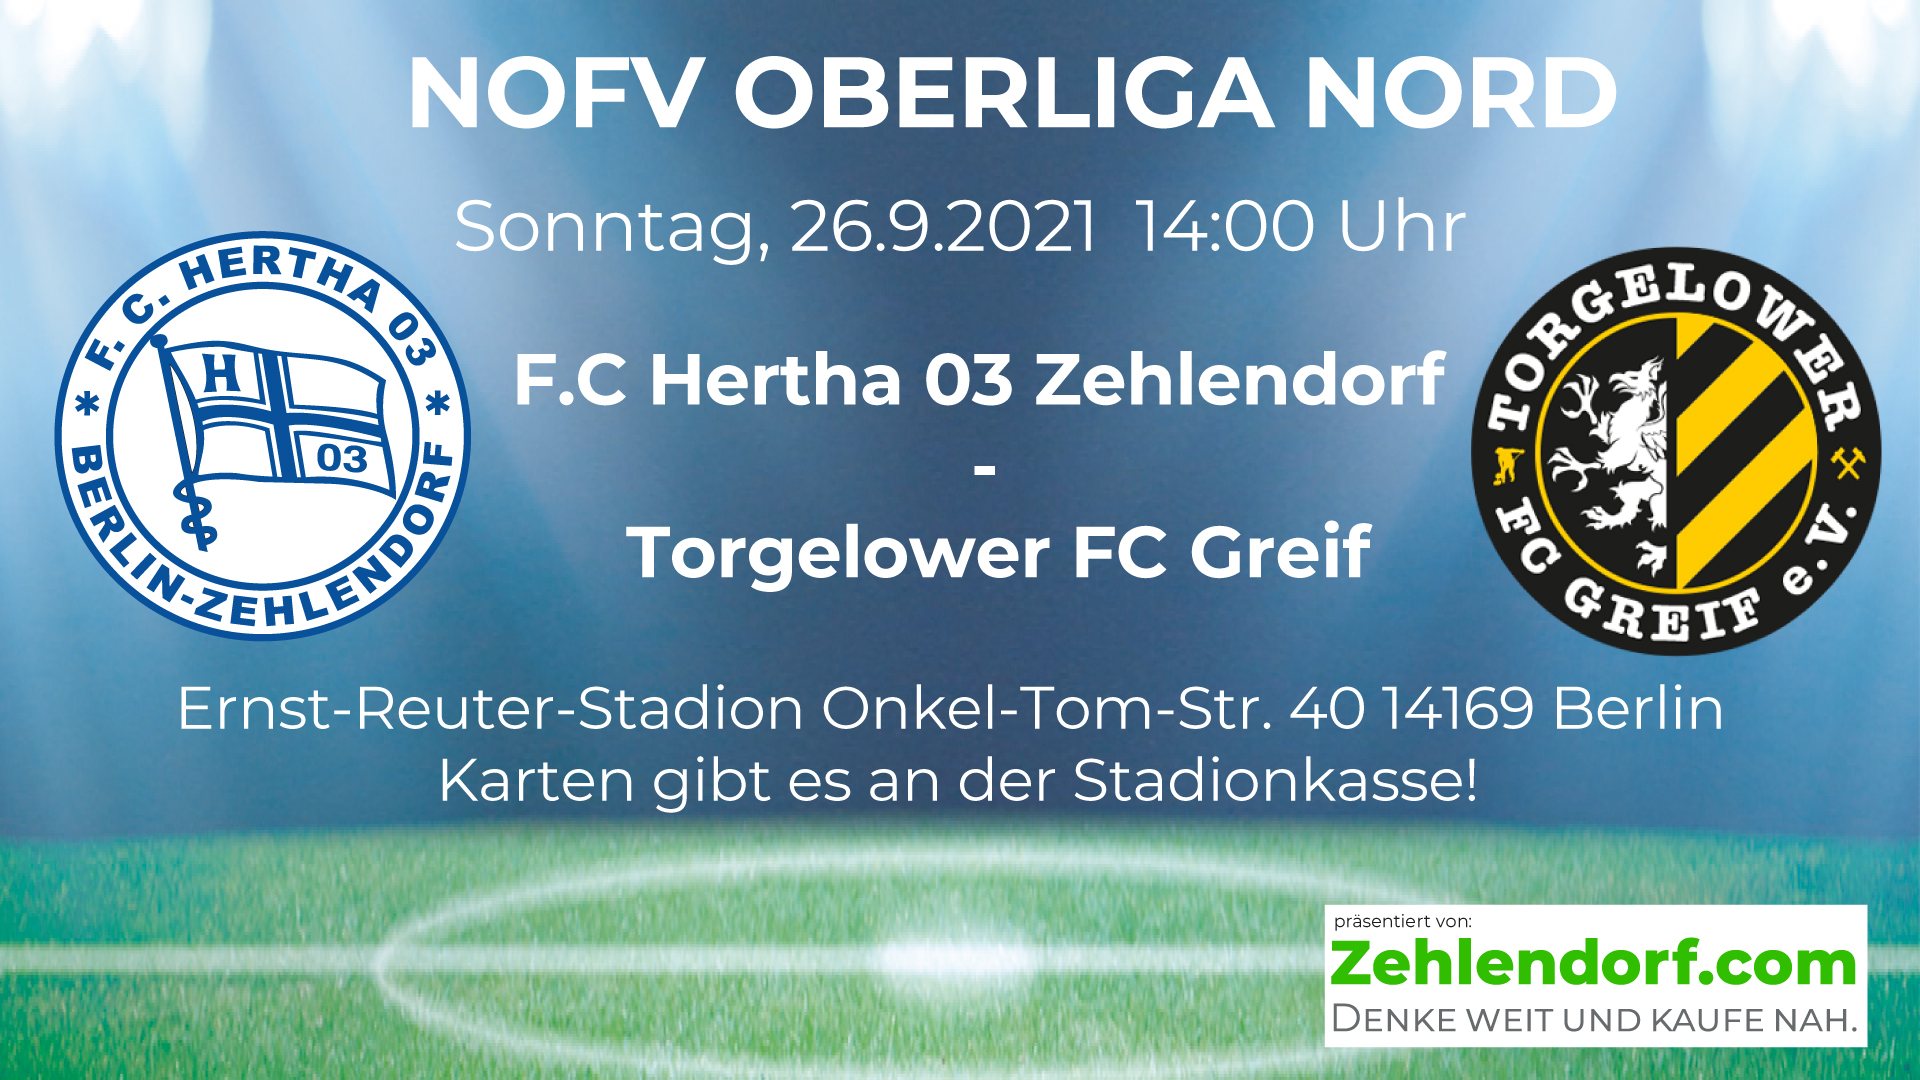 F.C. Hertha 03 Zehlendorf vs. Torgelow F.C. Greif am 26.9.2021